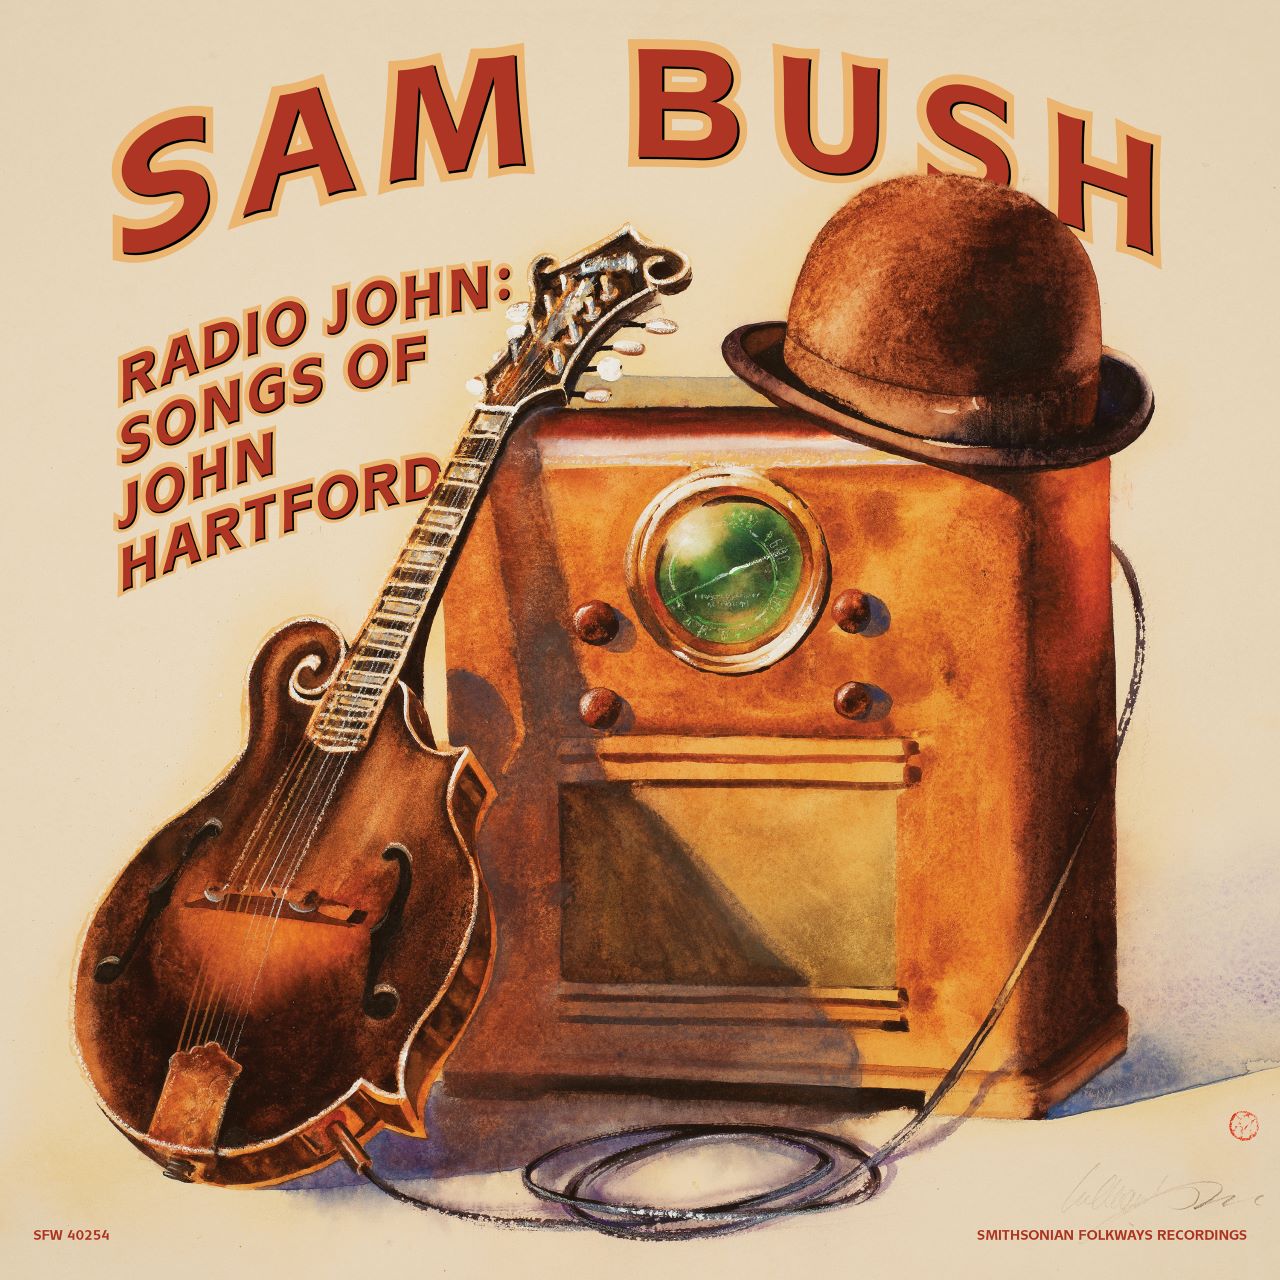 Sam Bush - Radio John Songs of John Hartford cover album